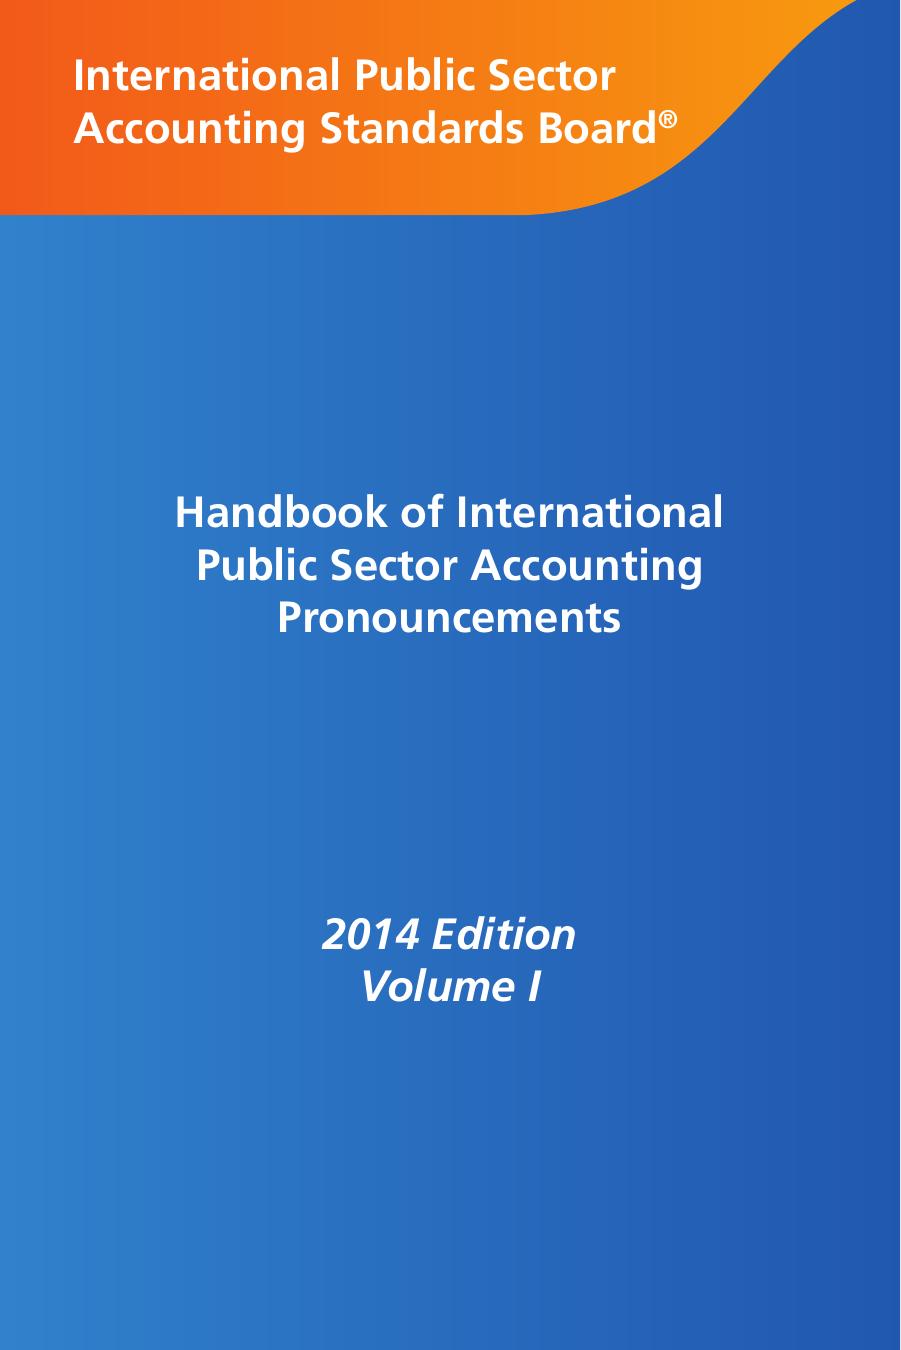 Handbook of International Public Sector Accounting Pronouncements Volume-1 2014